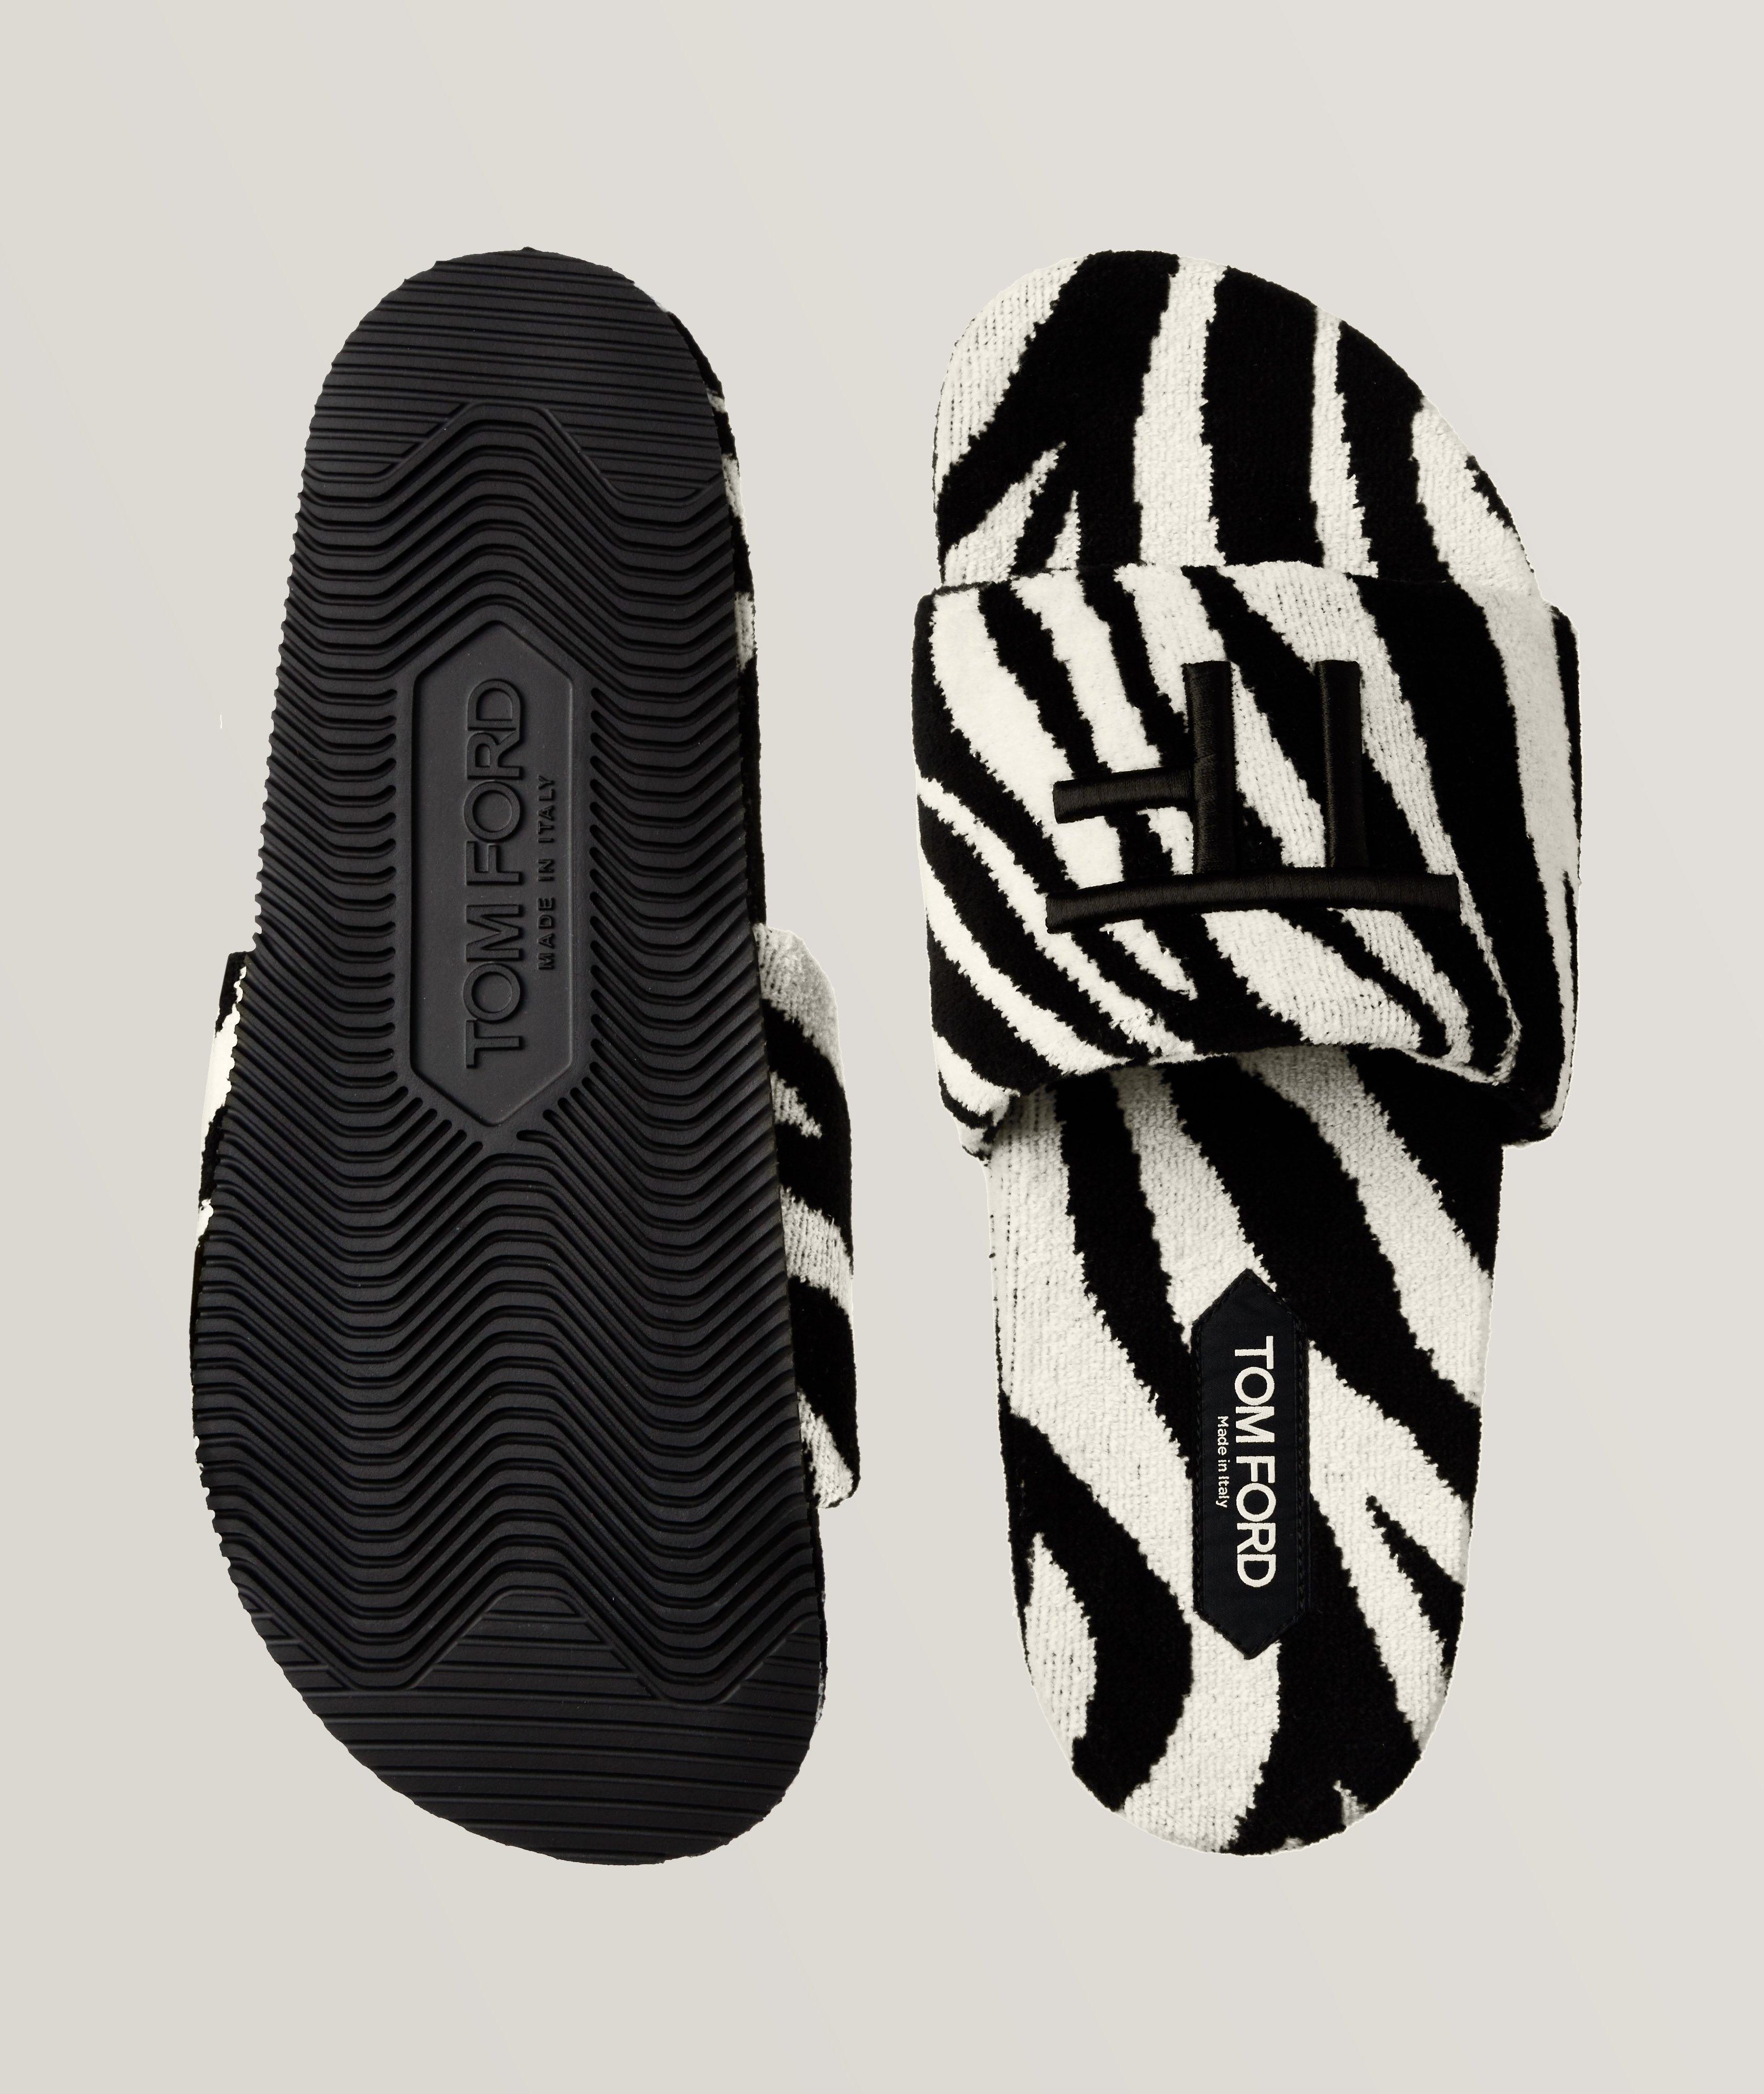 Harrison Jacquard Zebra Print Slippers image 2